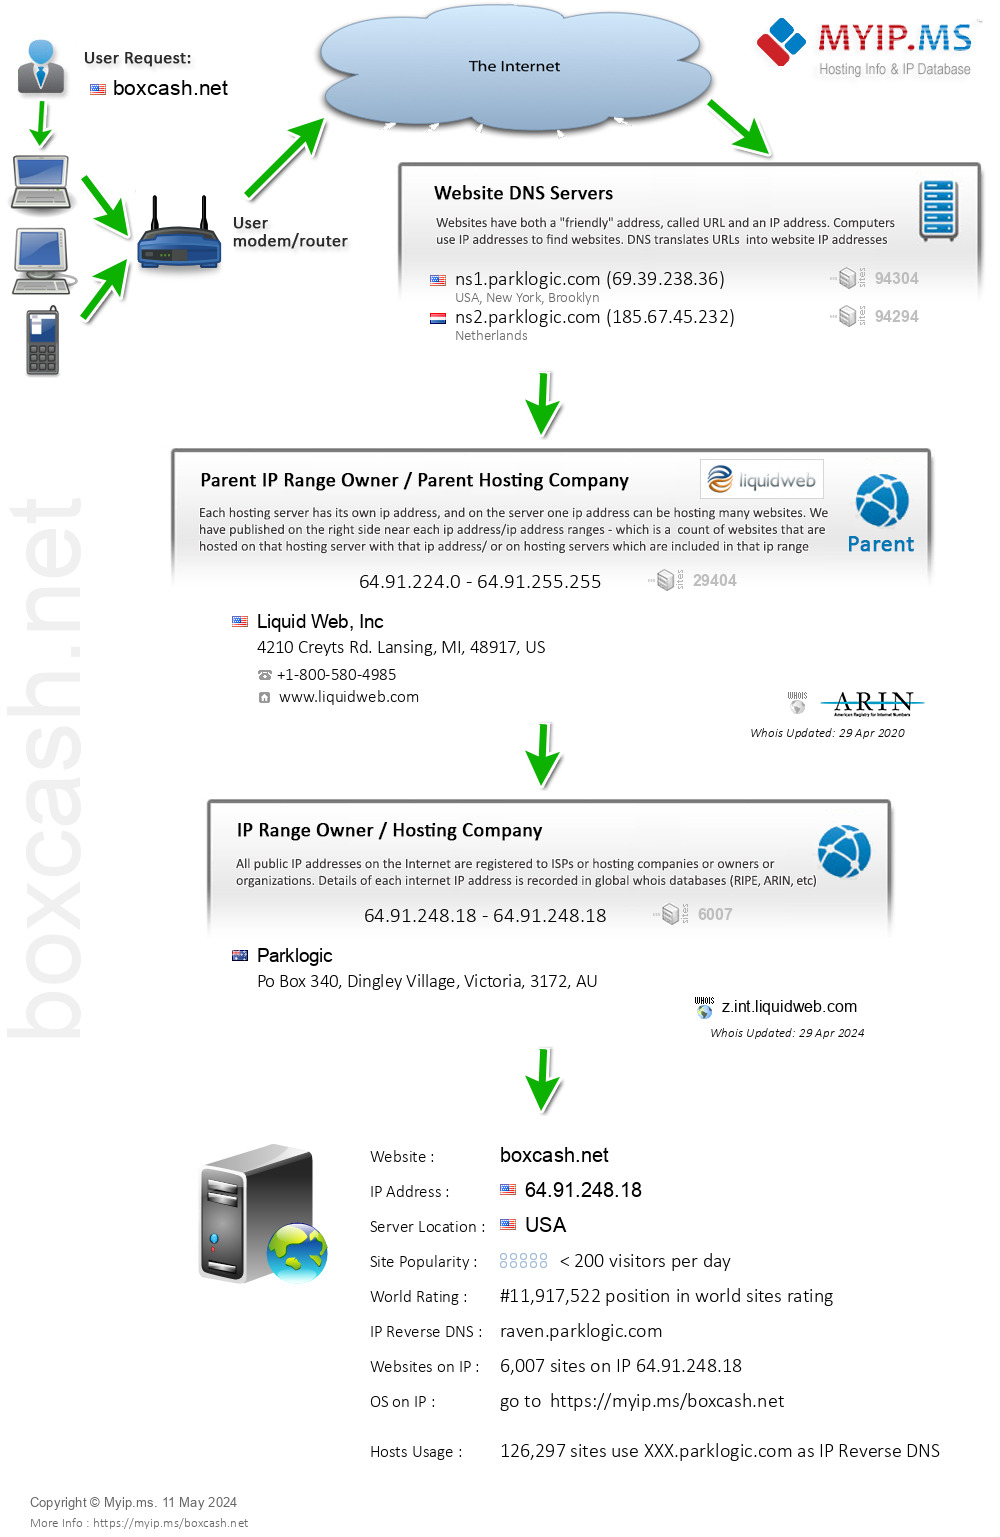 Boxcash.net - Website Hosting Visual IP Diagram